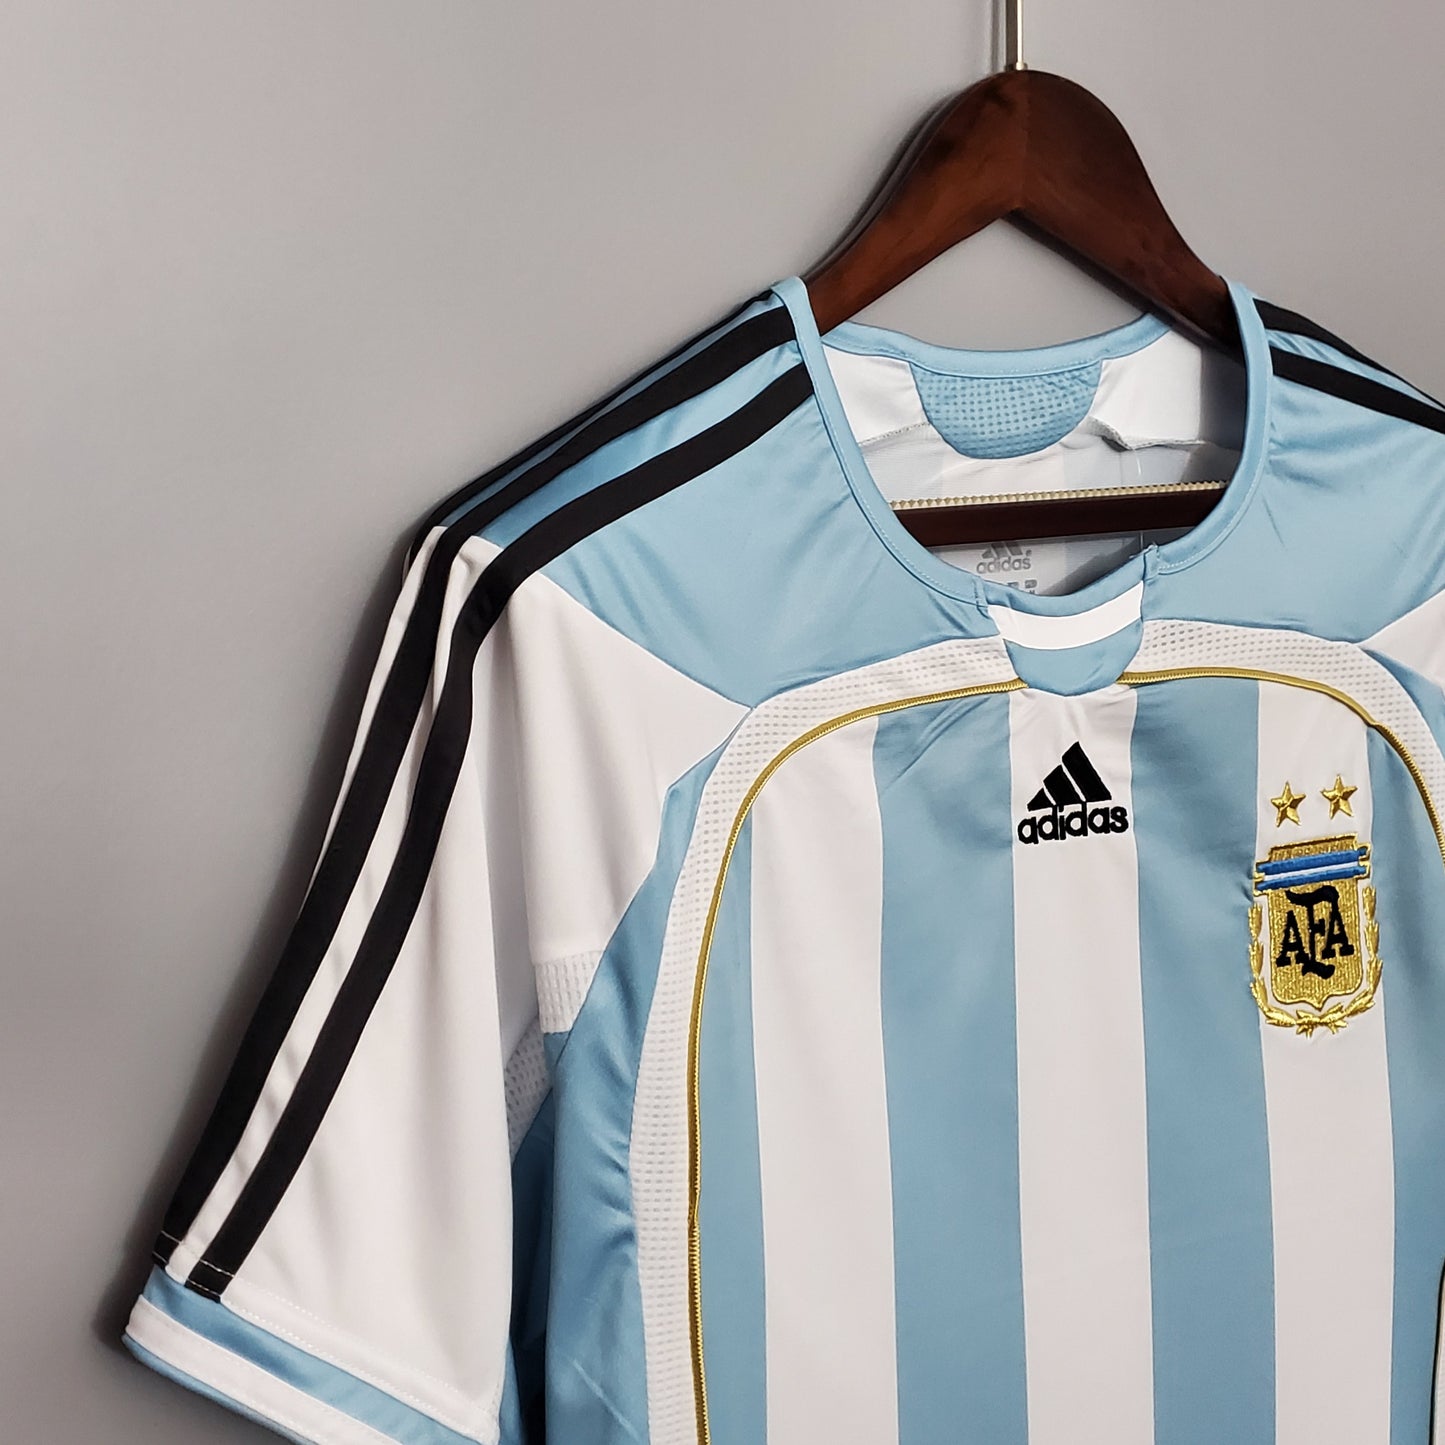 Argentina 2006 Home Shirt